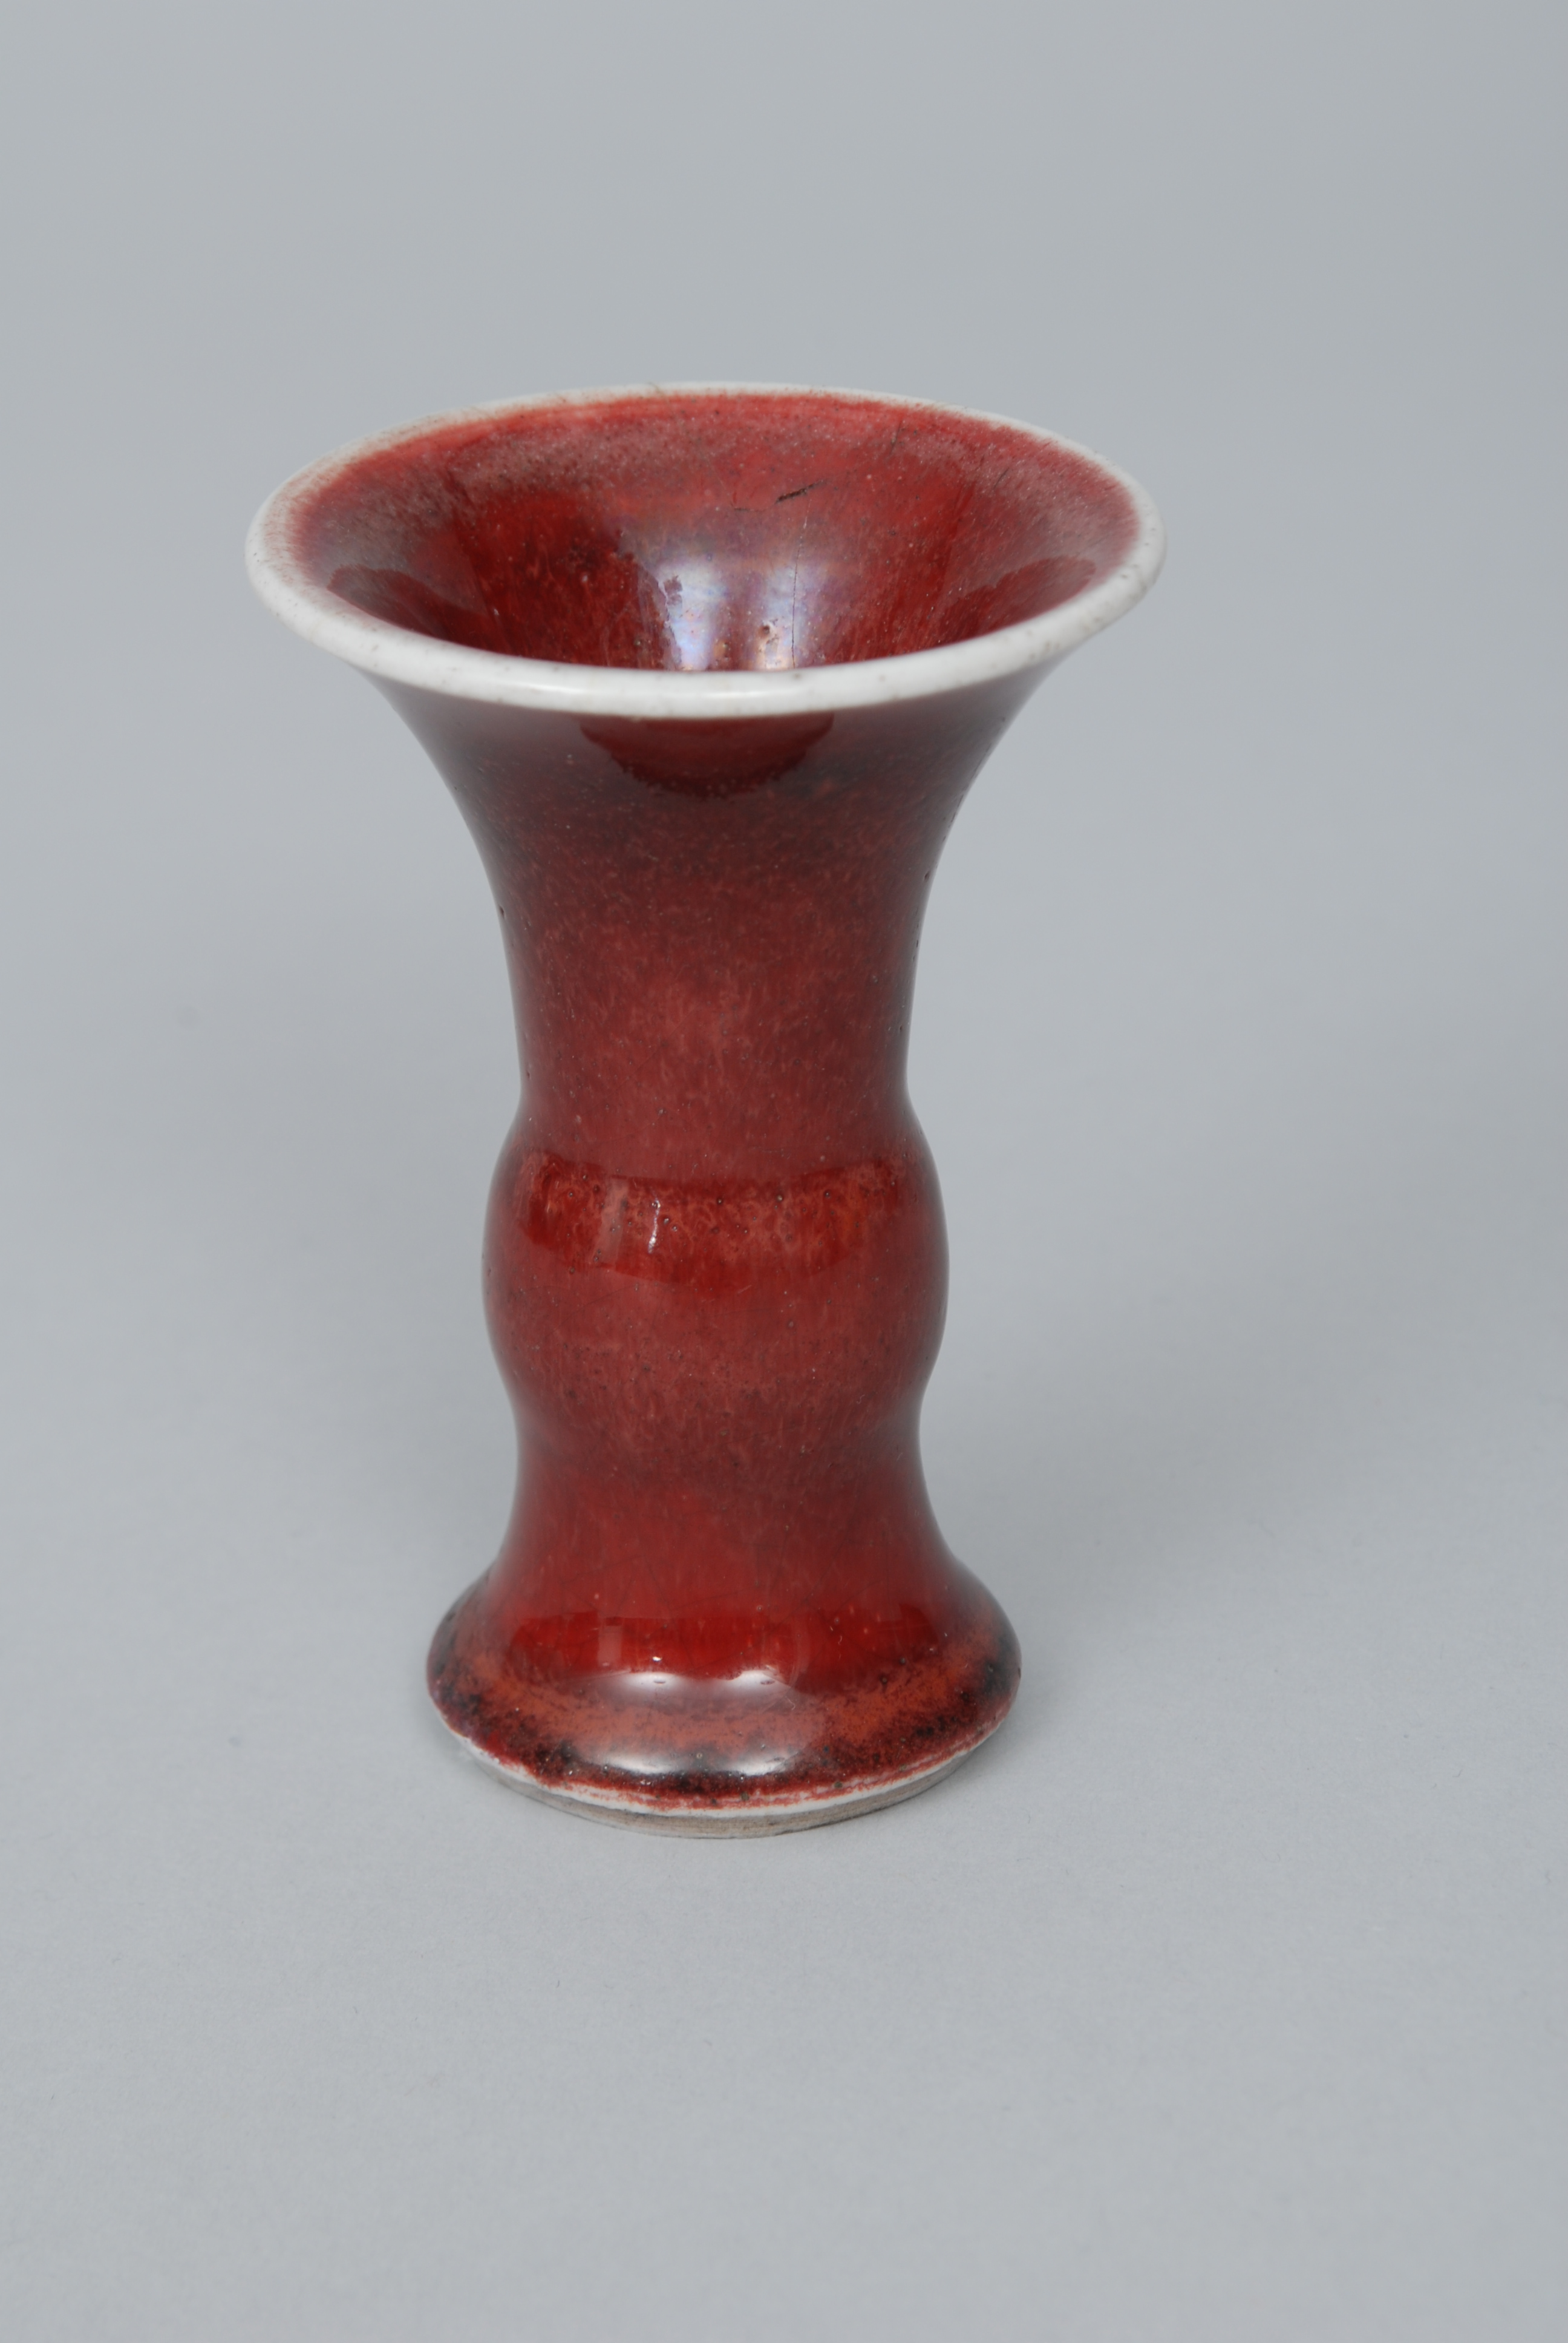 A miniature balsuter-shaped vase